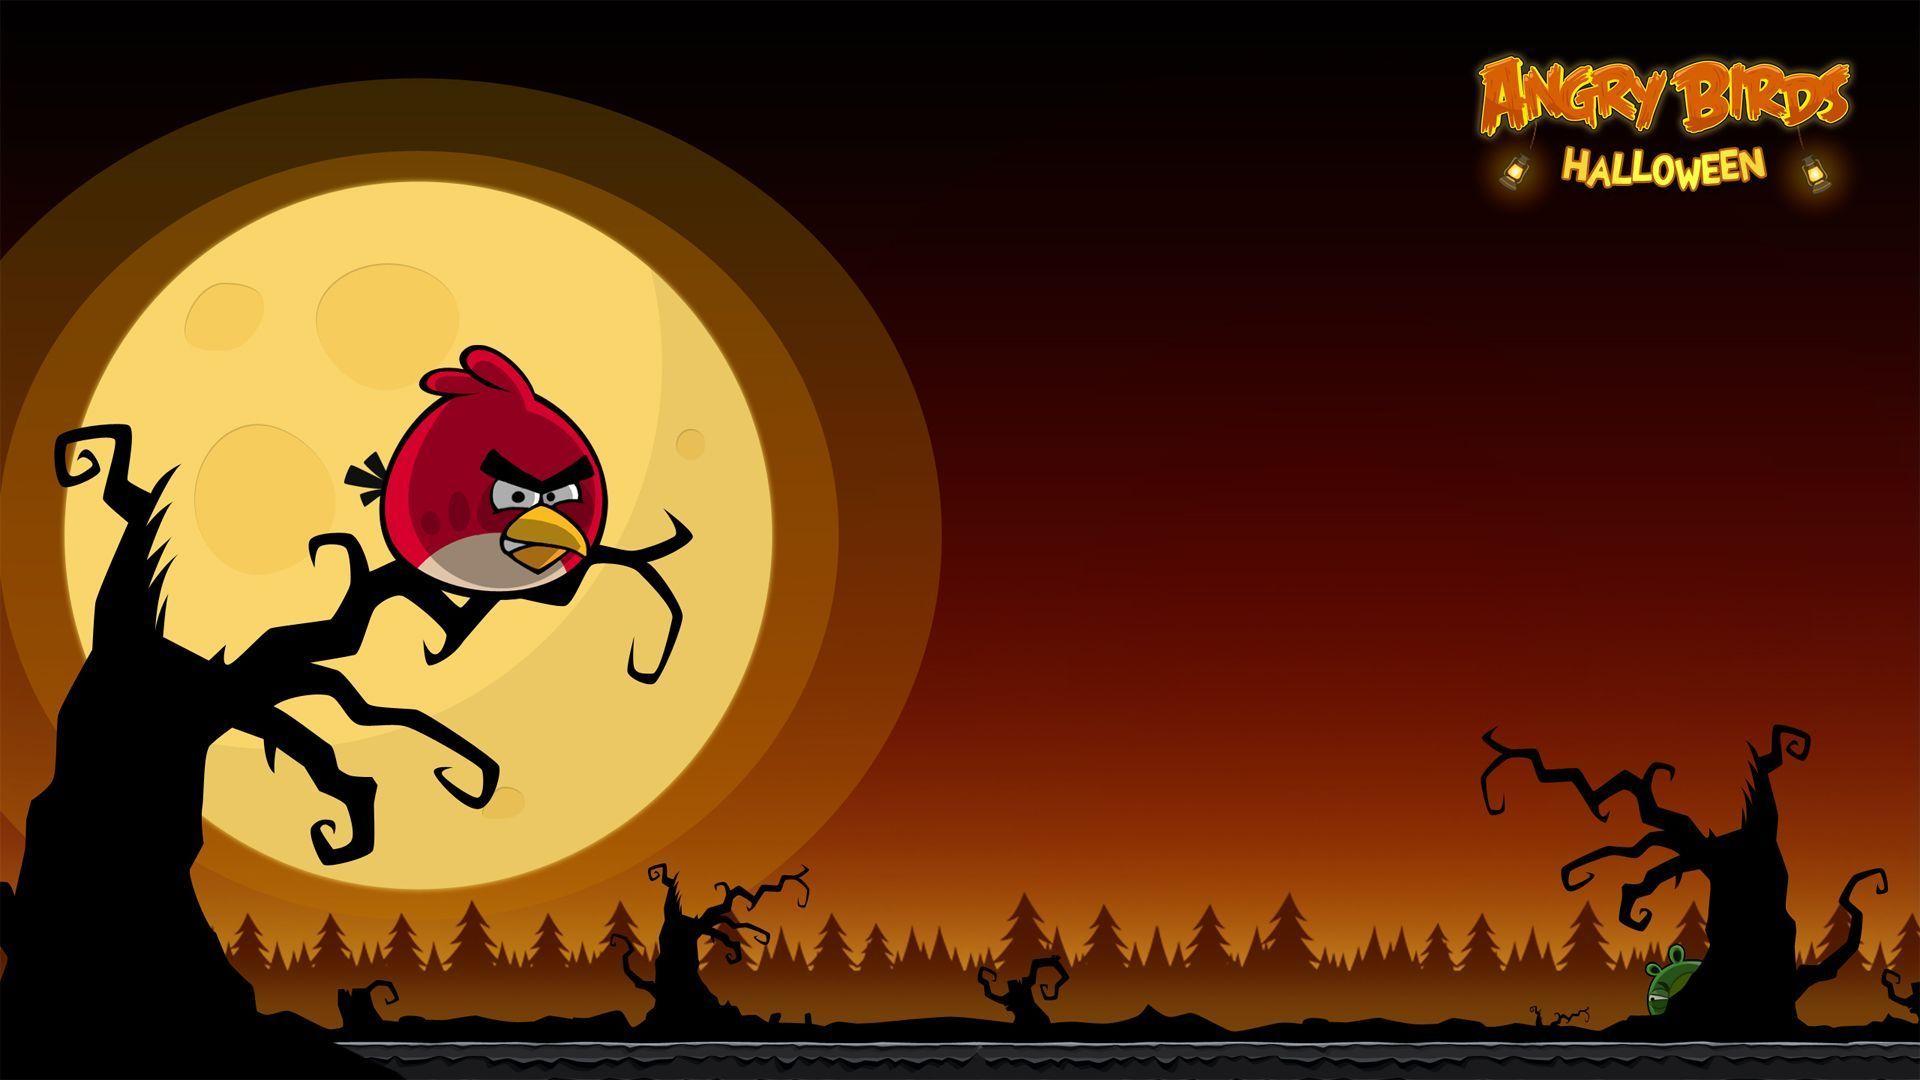 Get Your Angry Birds Halloween Wallpaper Here!